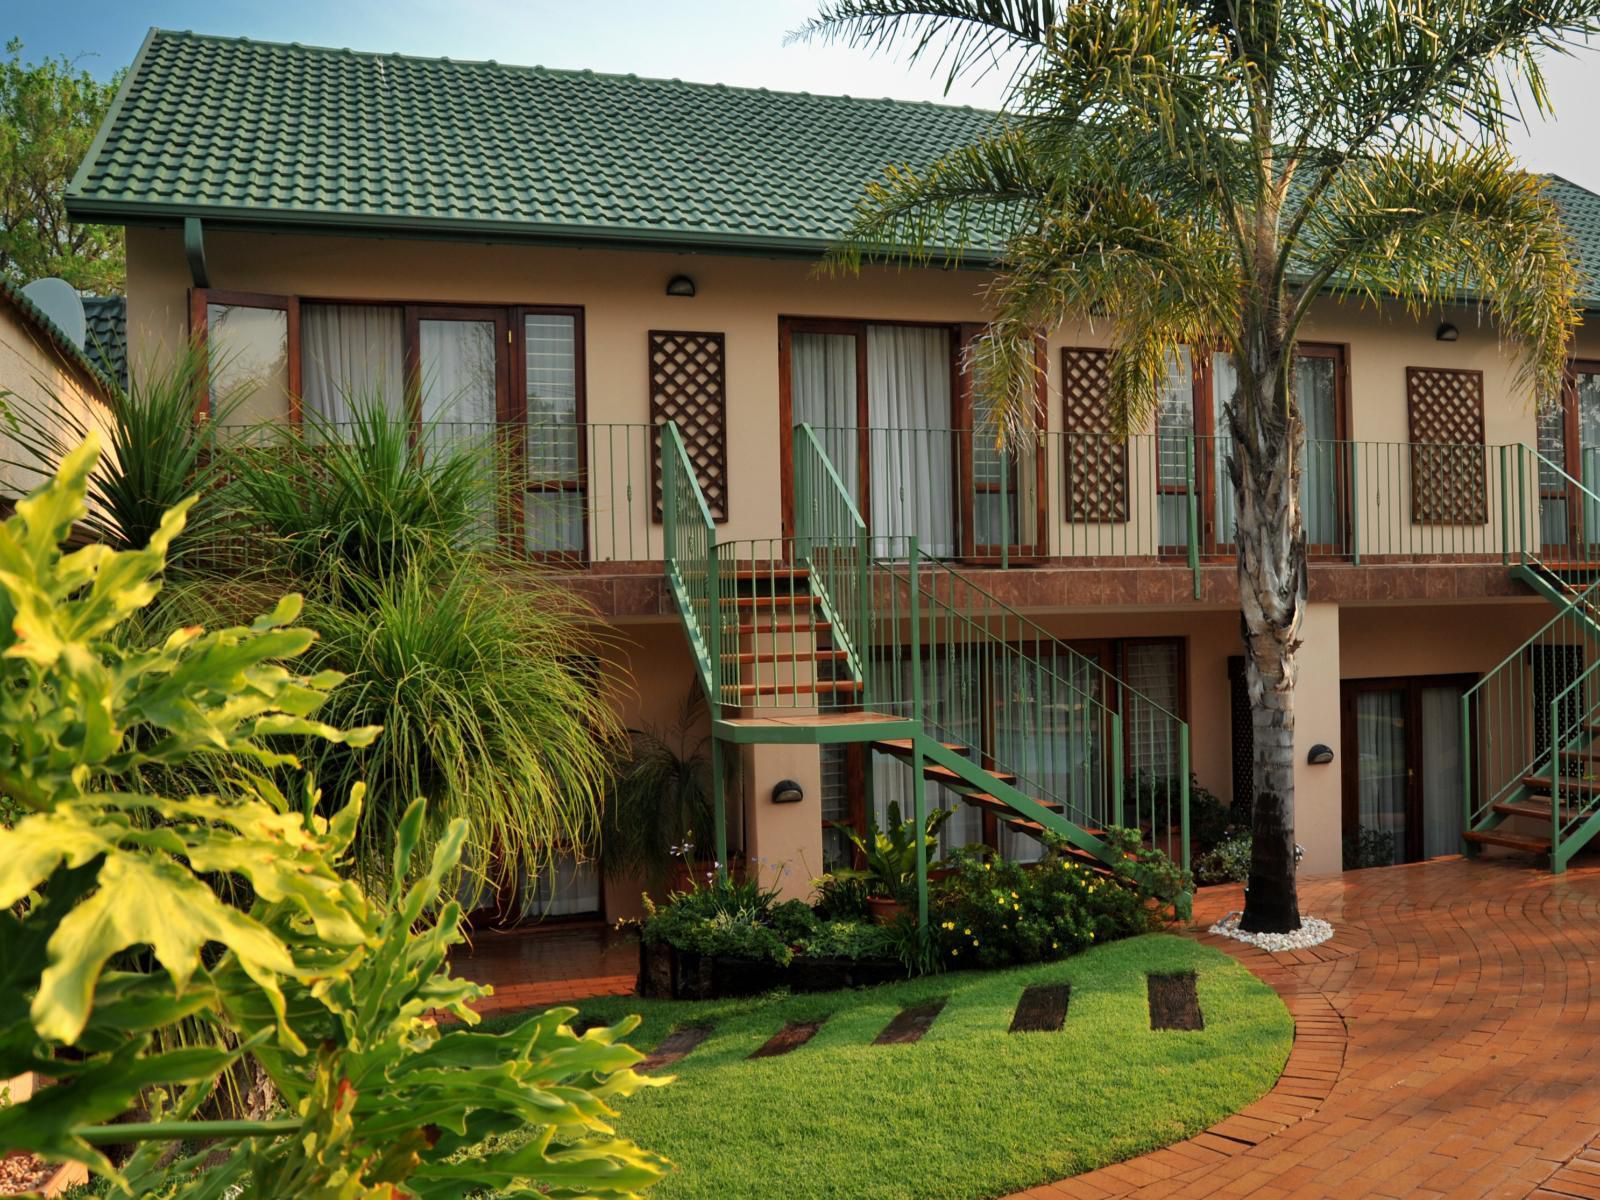 Claires Of Sandton Parkmore Johannesburg Gauteng South Africa House, Building, Architecture, Palm Tree, Plant, Nature, Wood